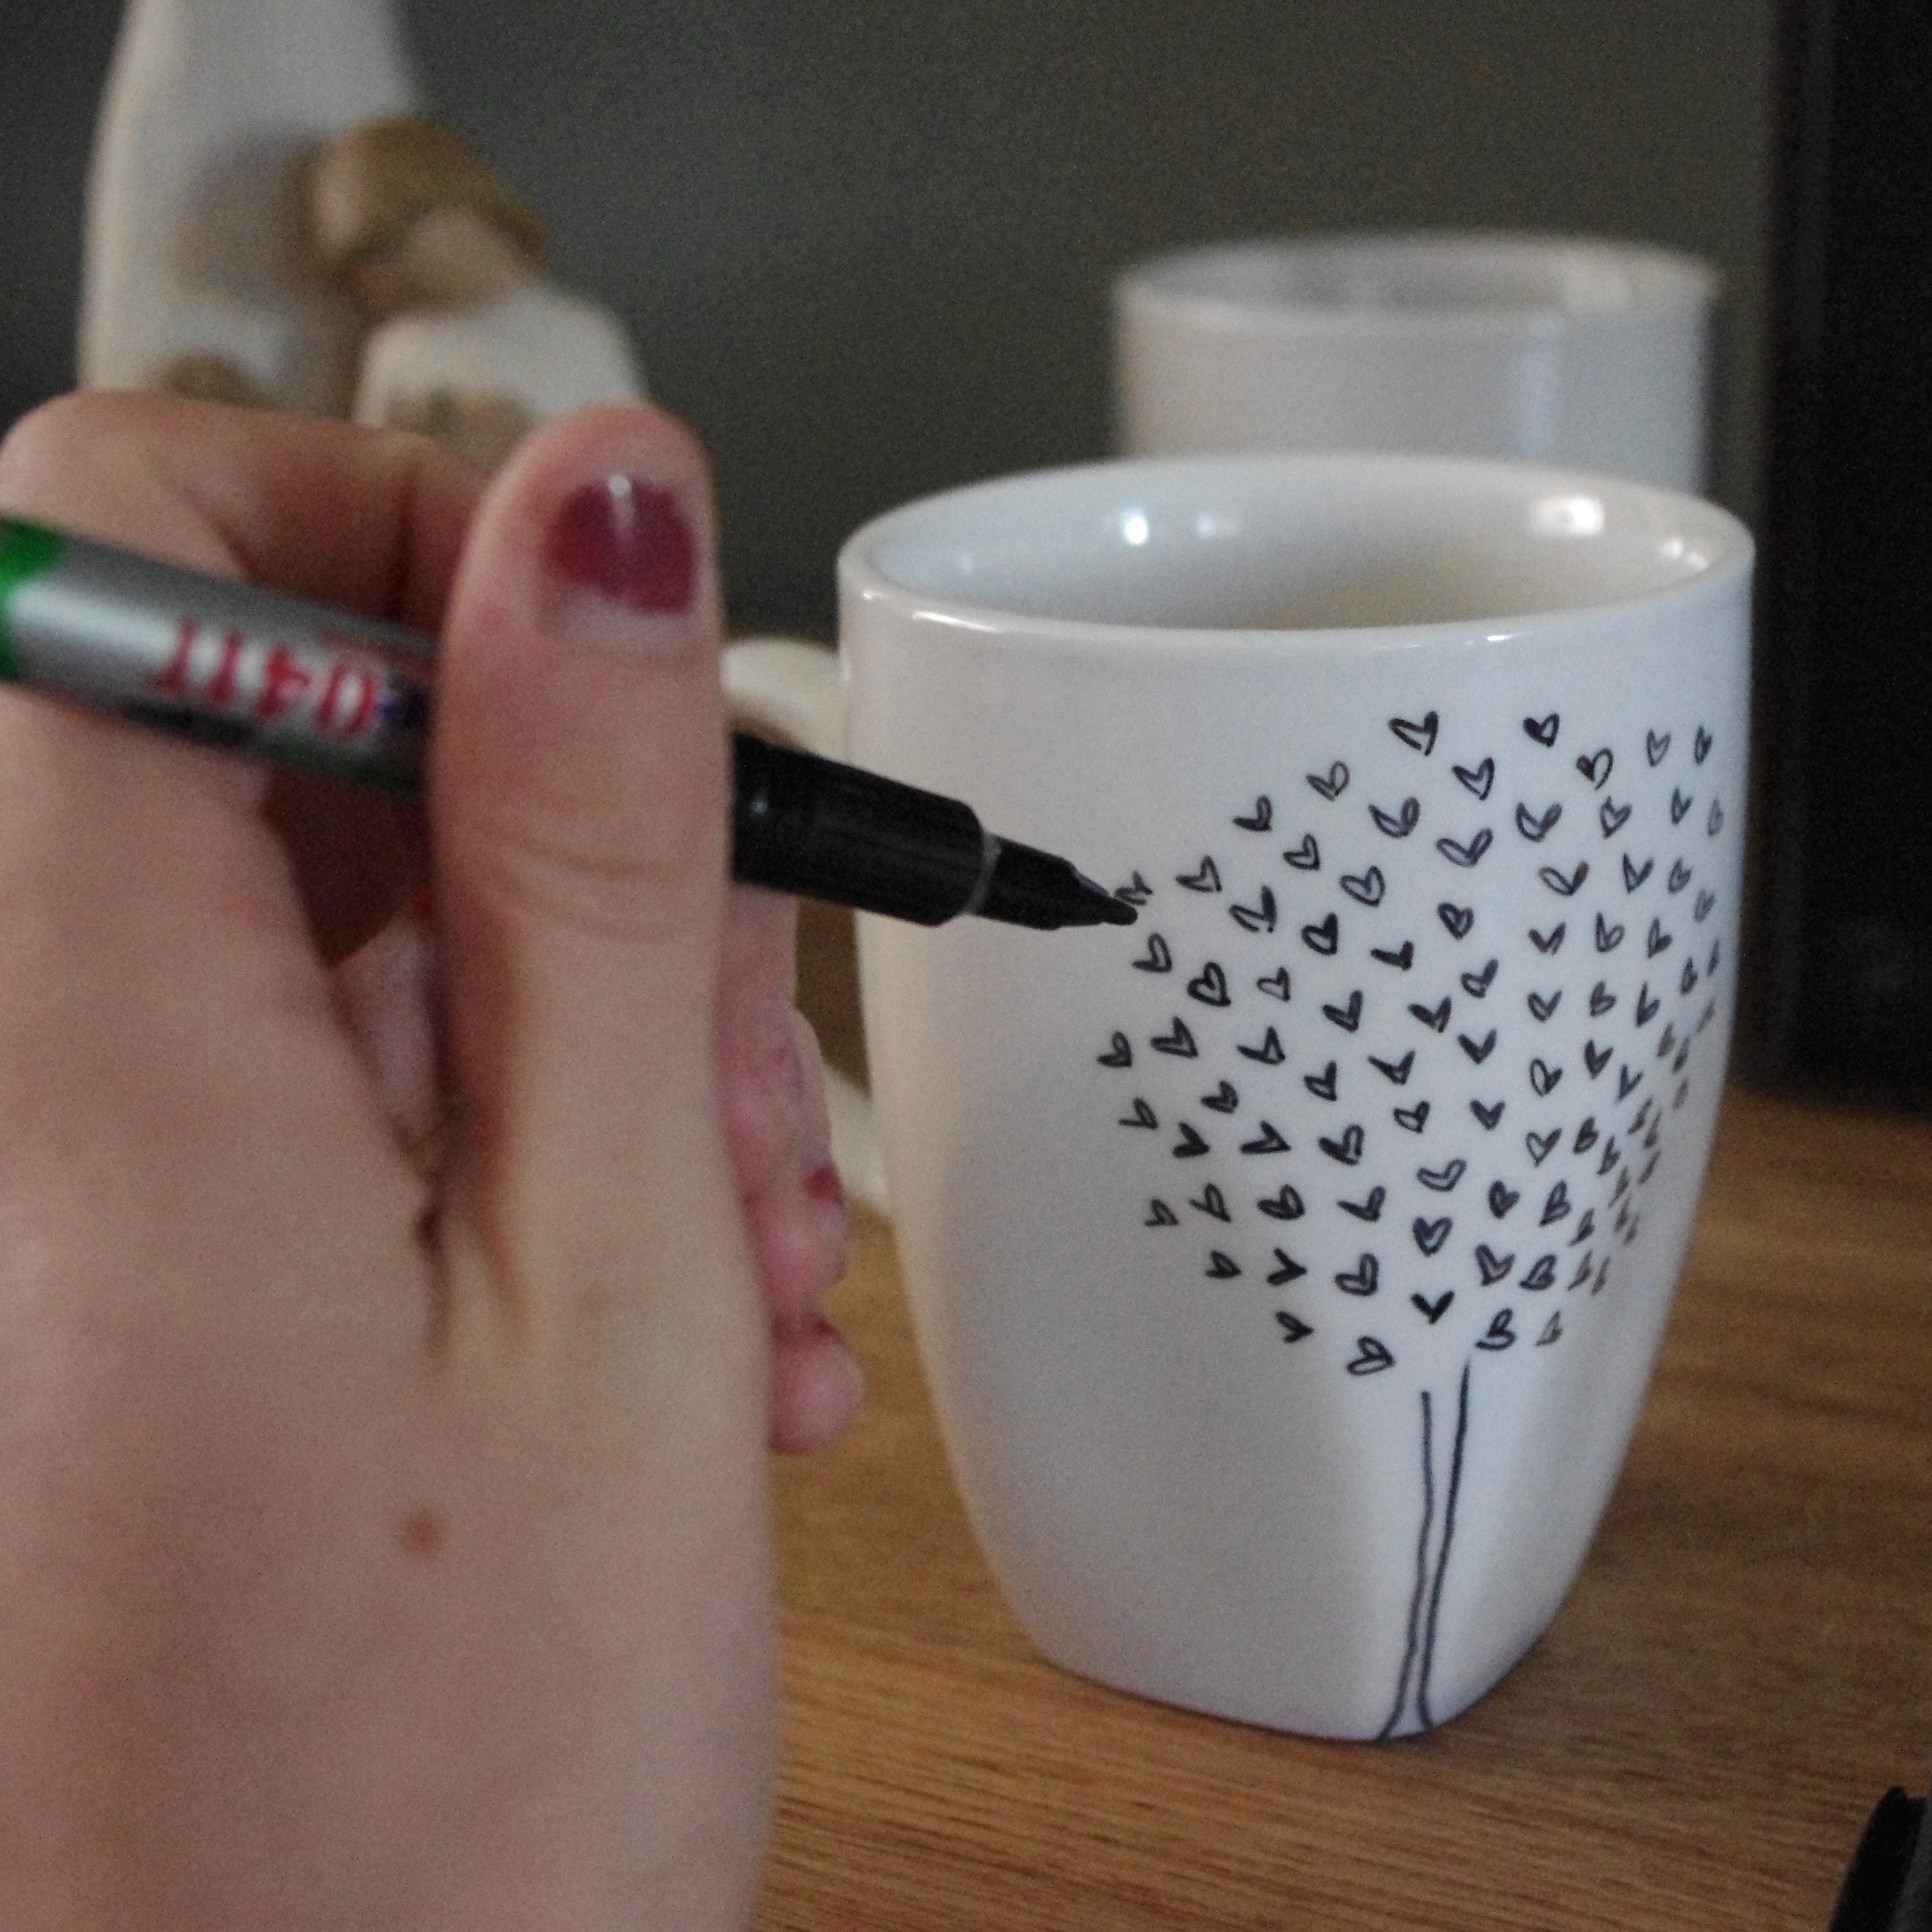 Best ideas about DIY Mugs Designs
. Save or Pin DIY Mug Design Now.